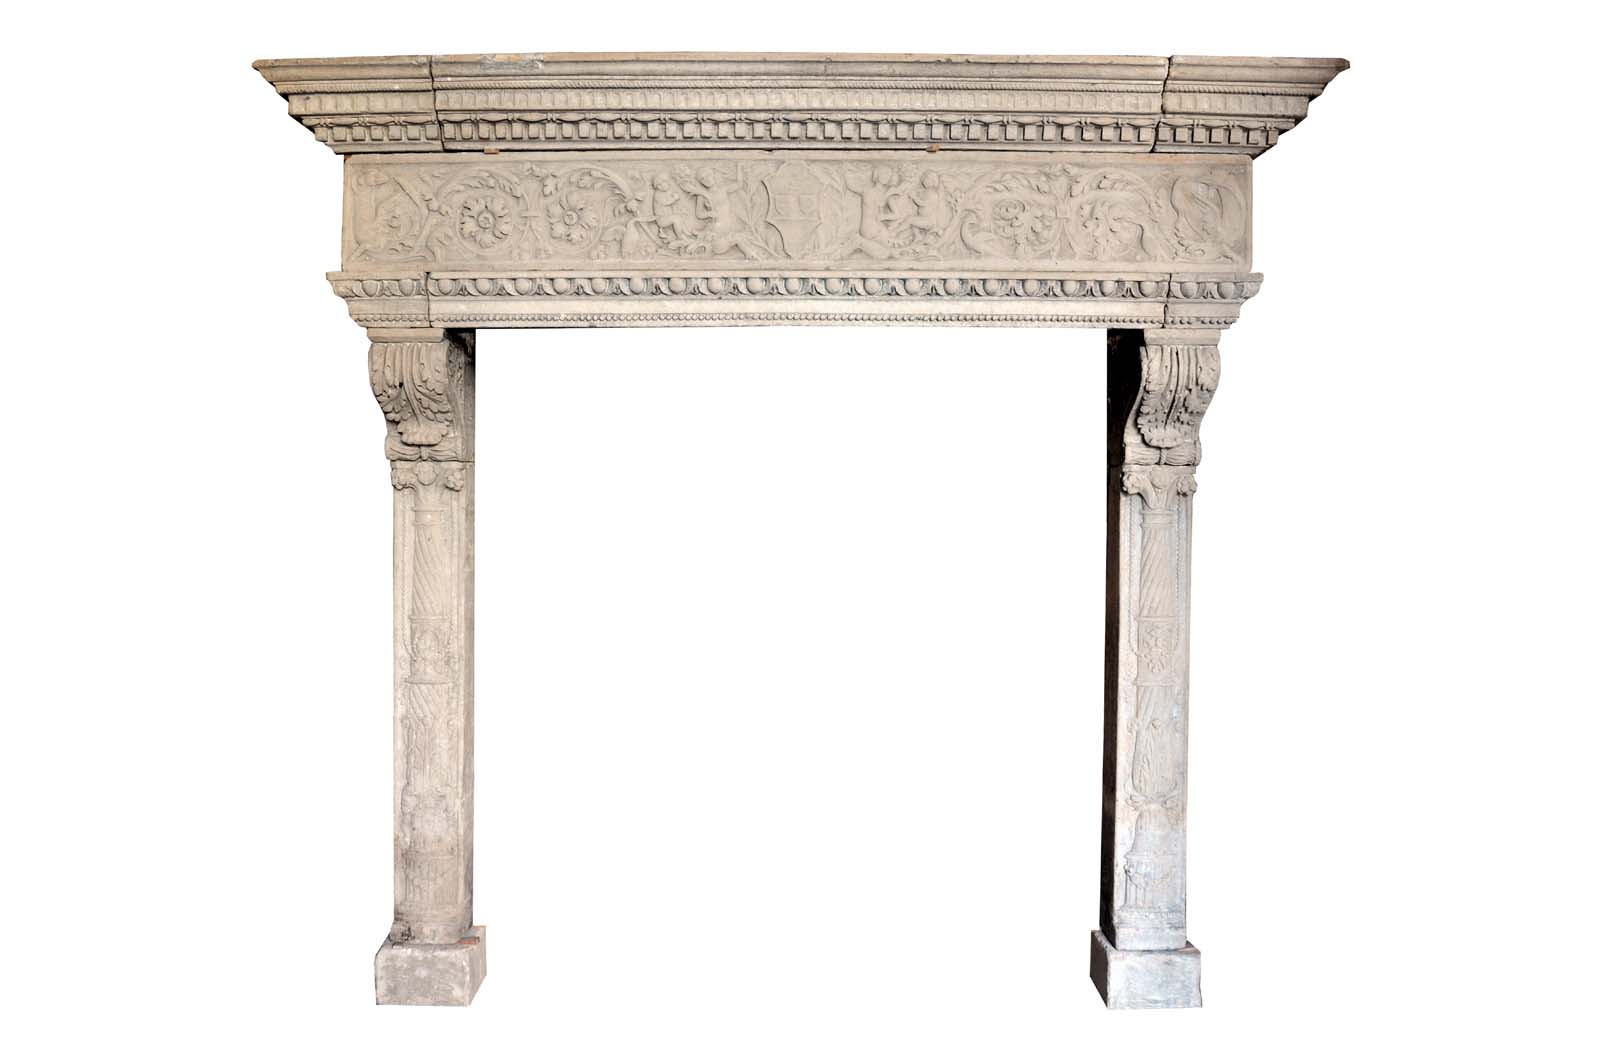 Italian Renaissance style limestone fireplace - late 19th century.